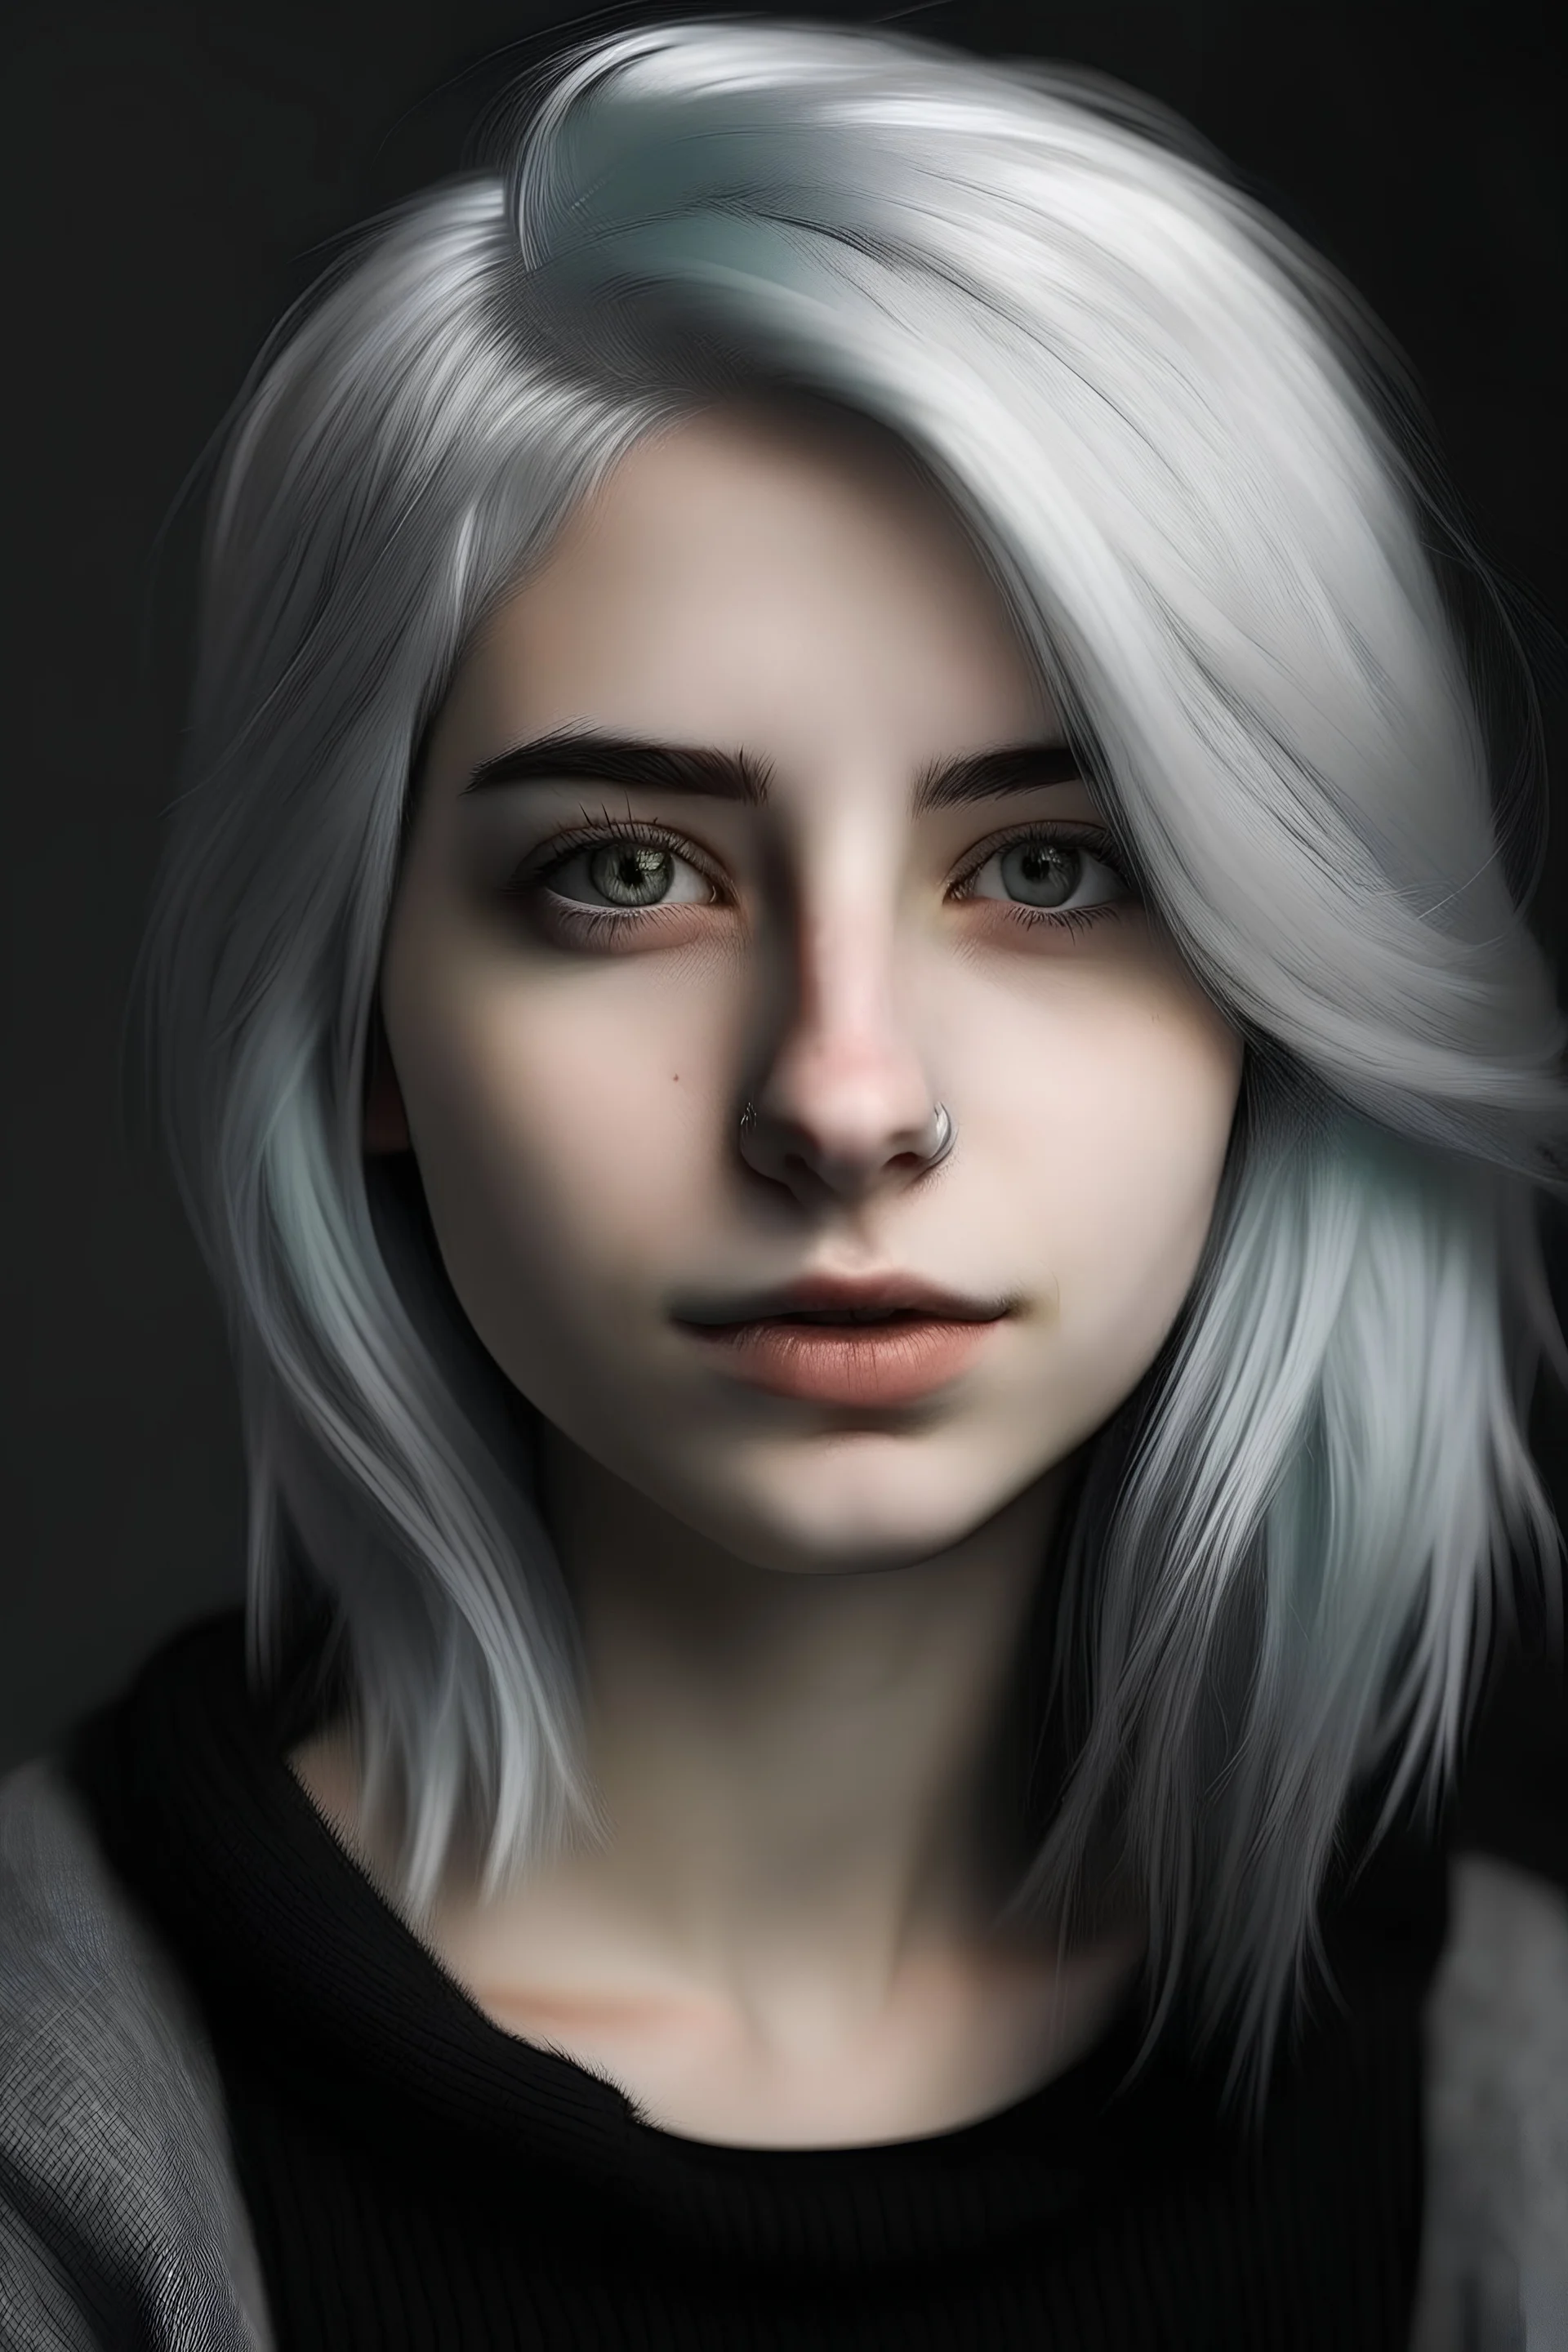 Human with silverish hair and dark eyes